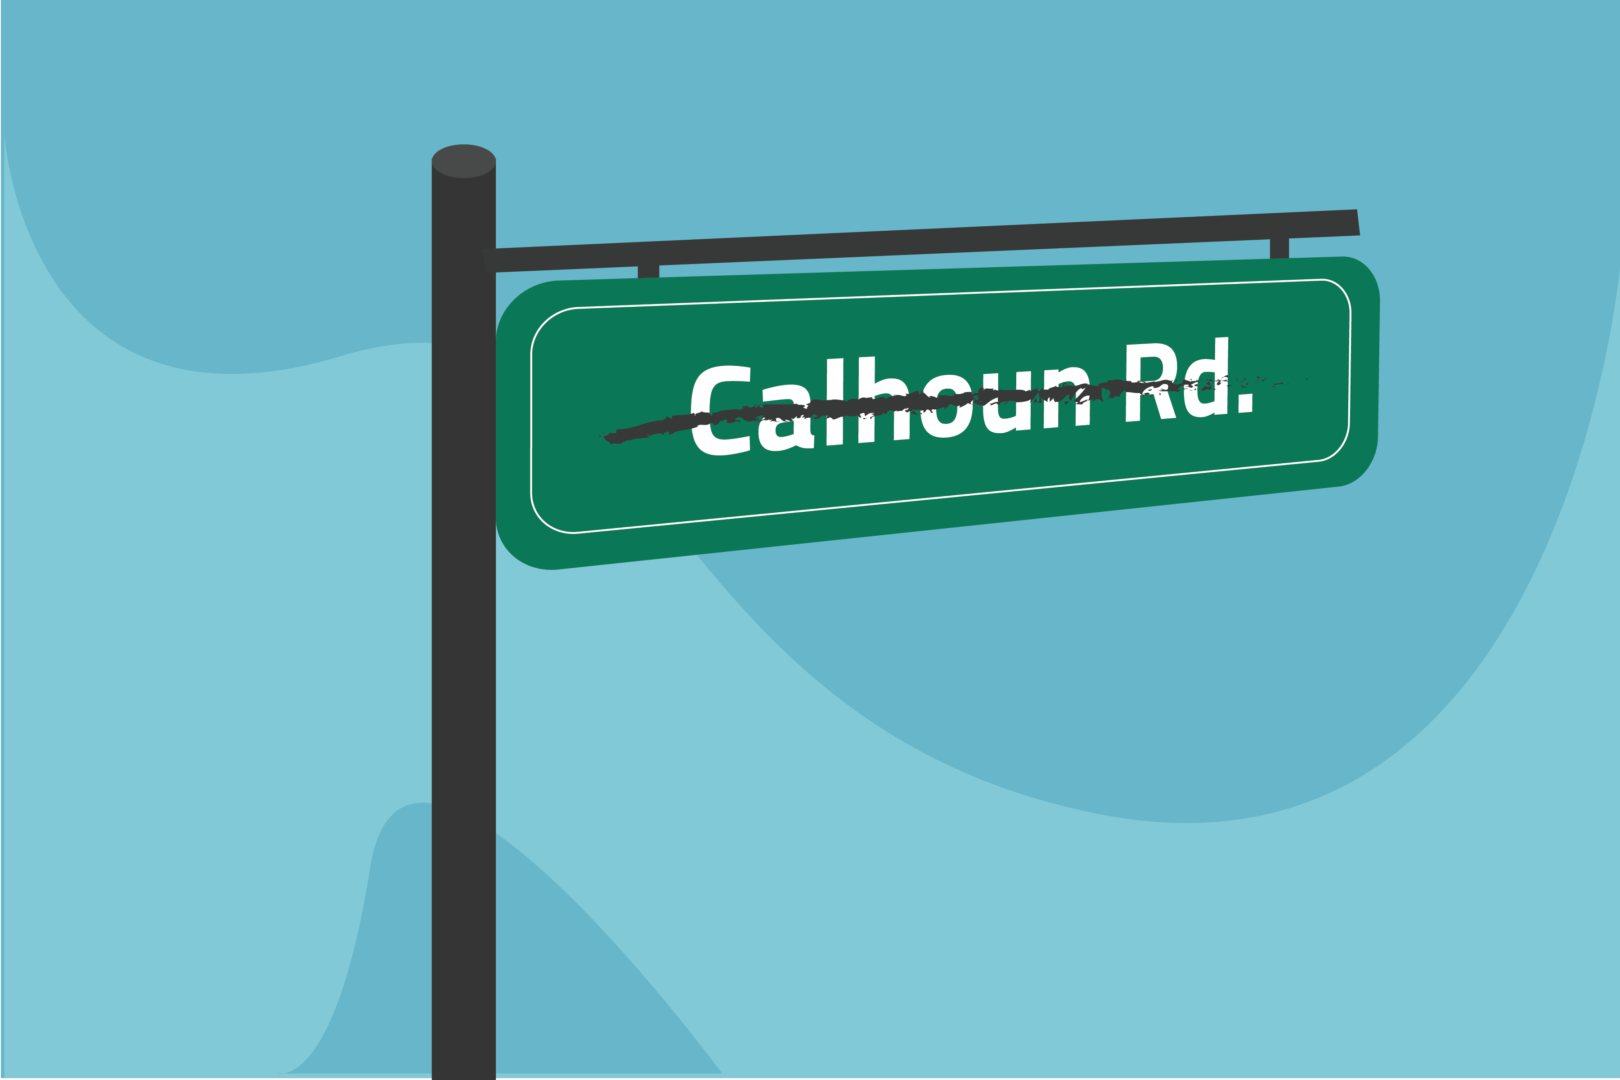 Calhoun Road